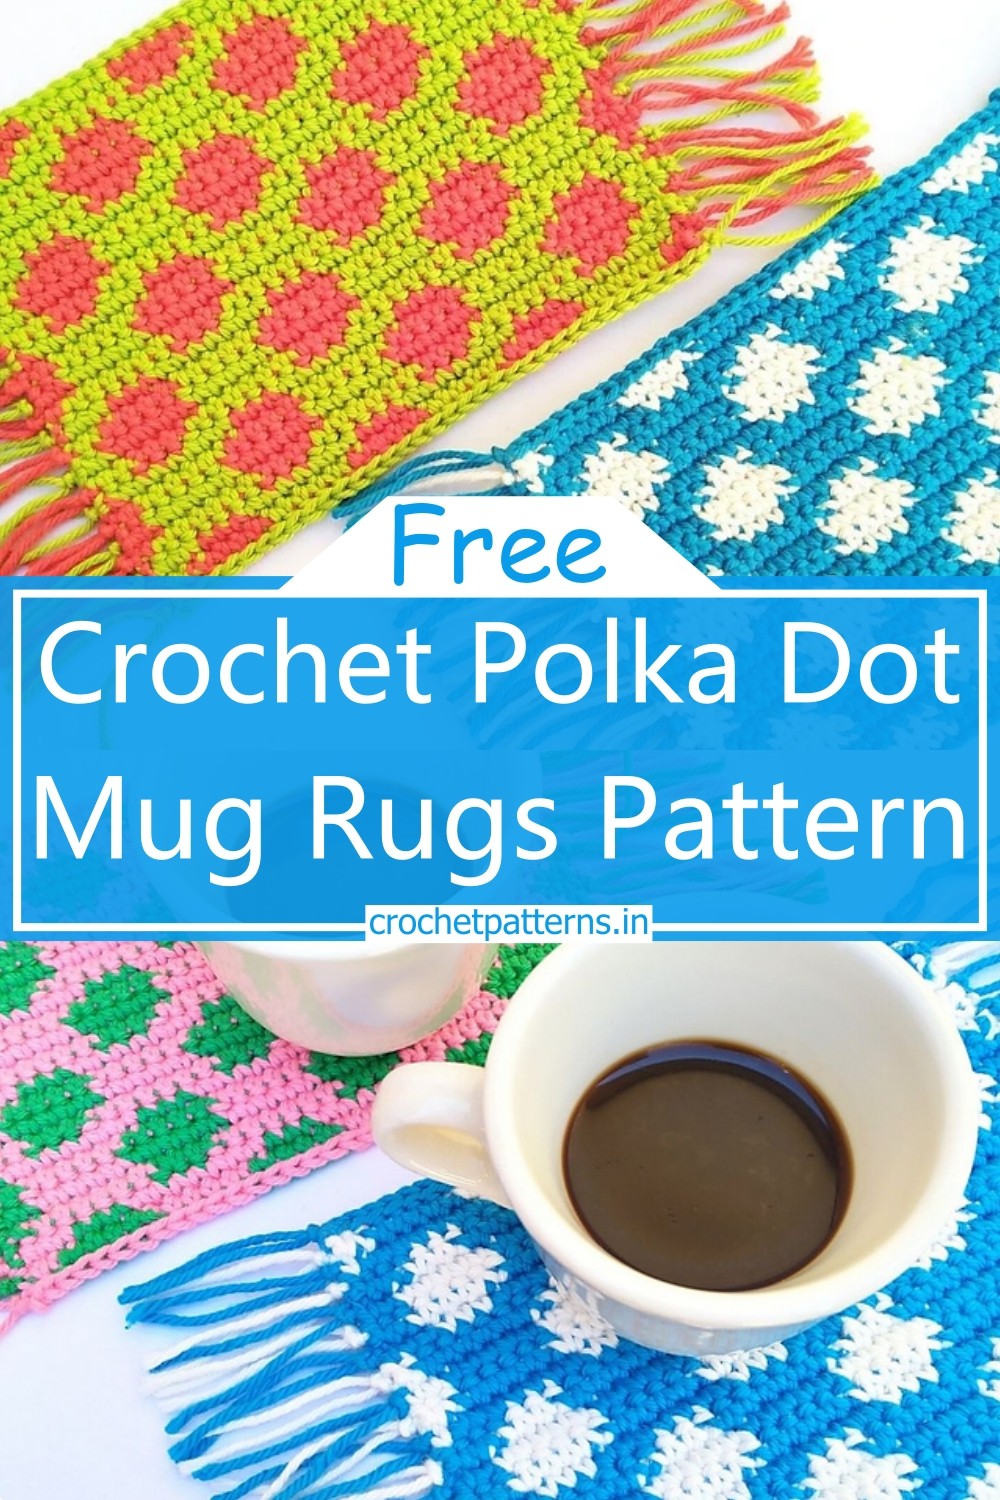 Crochet Polka Dot Mug Rugs Pattern 